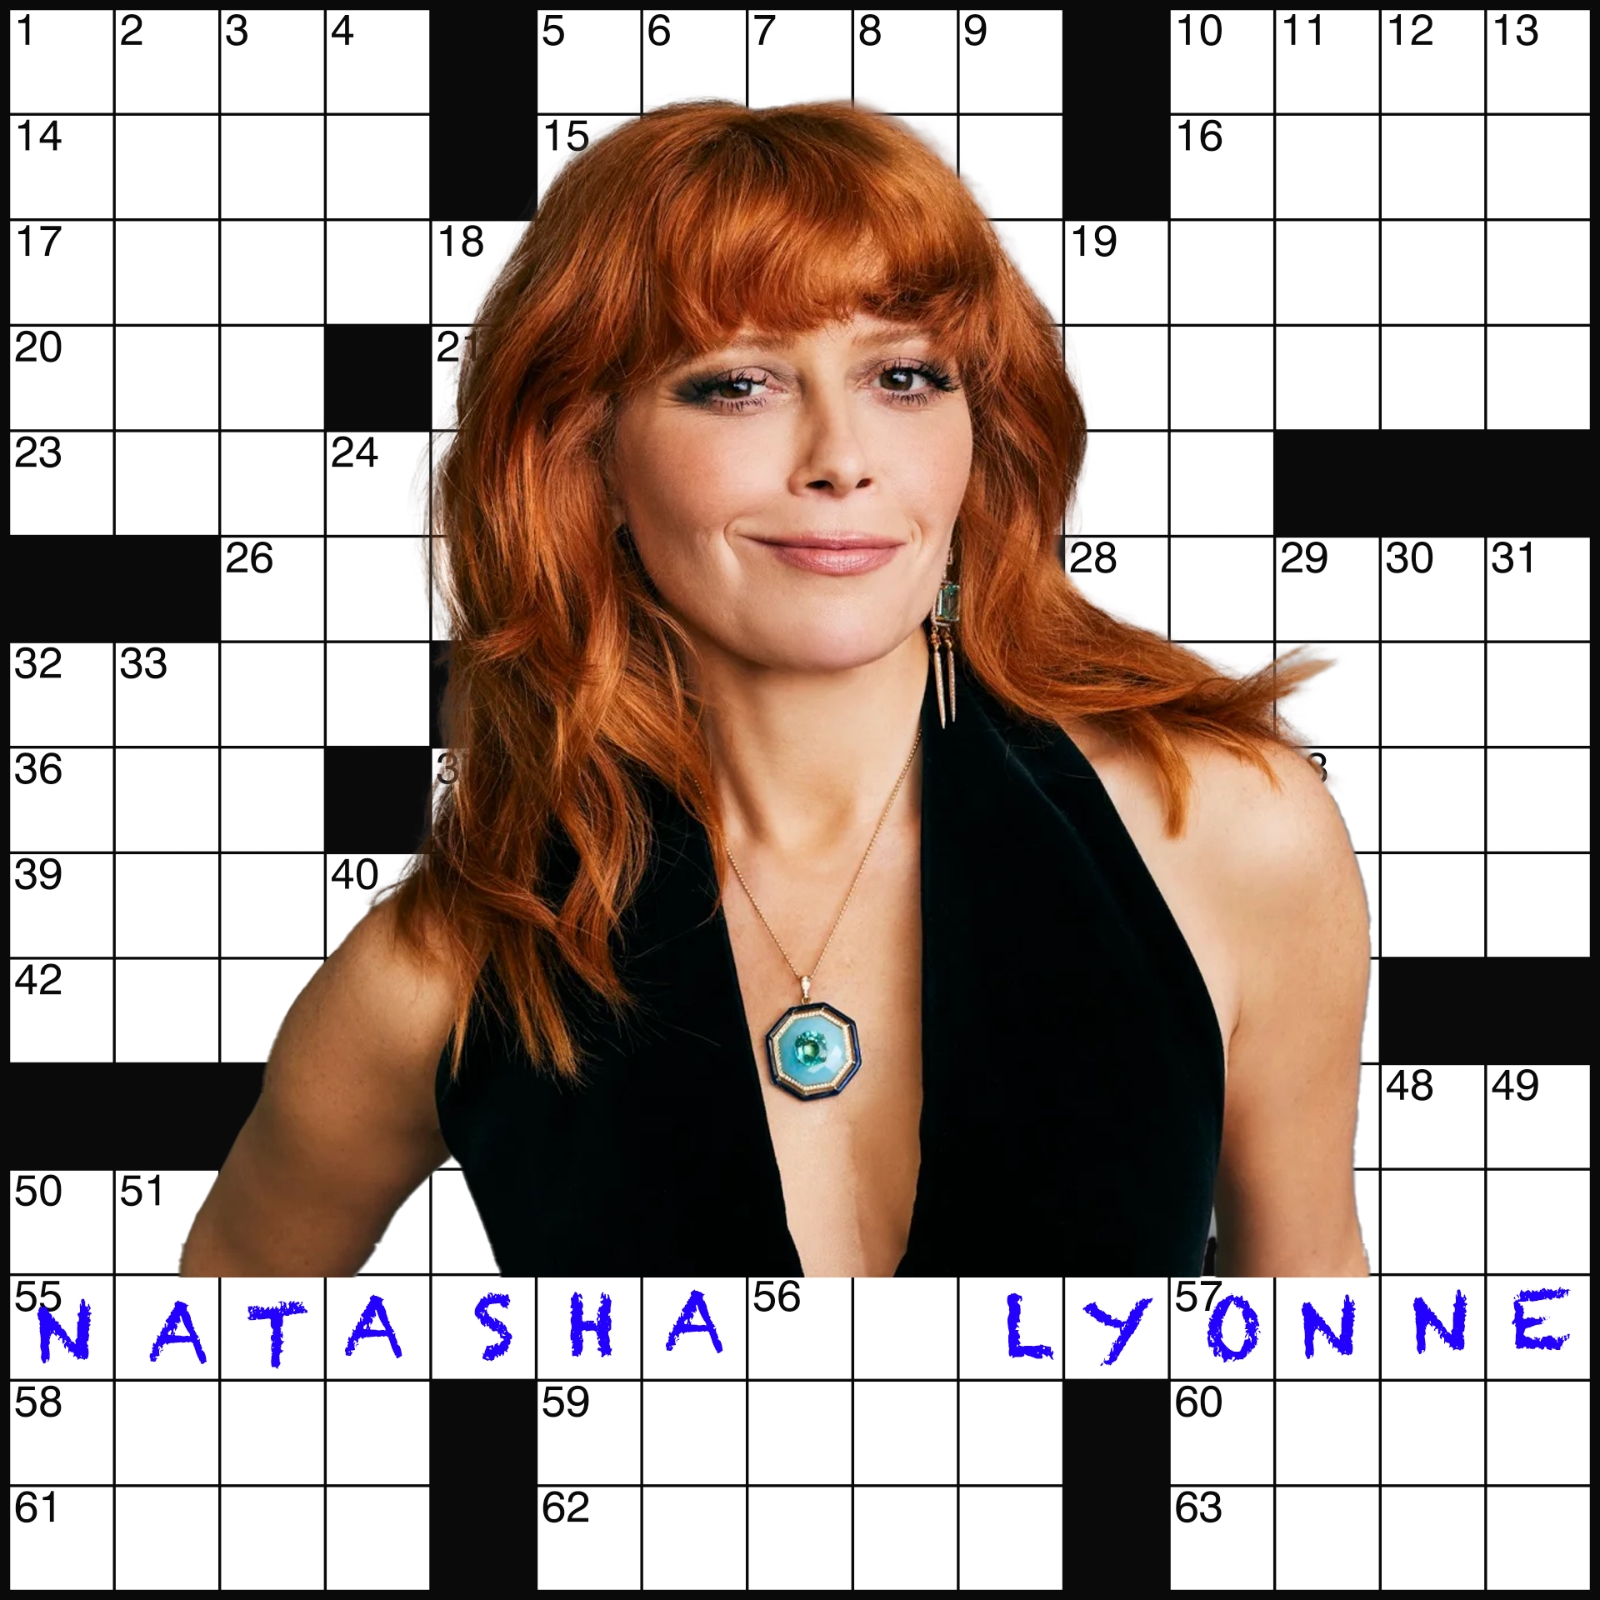 Do the New York Times Sunday crossword with Natasha Lyonne.